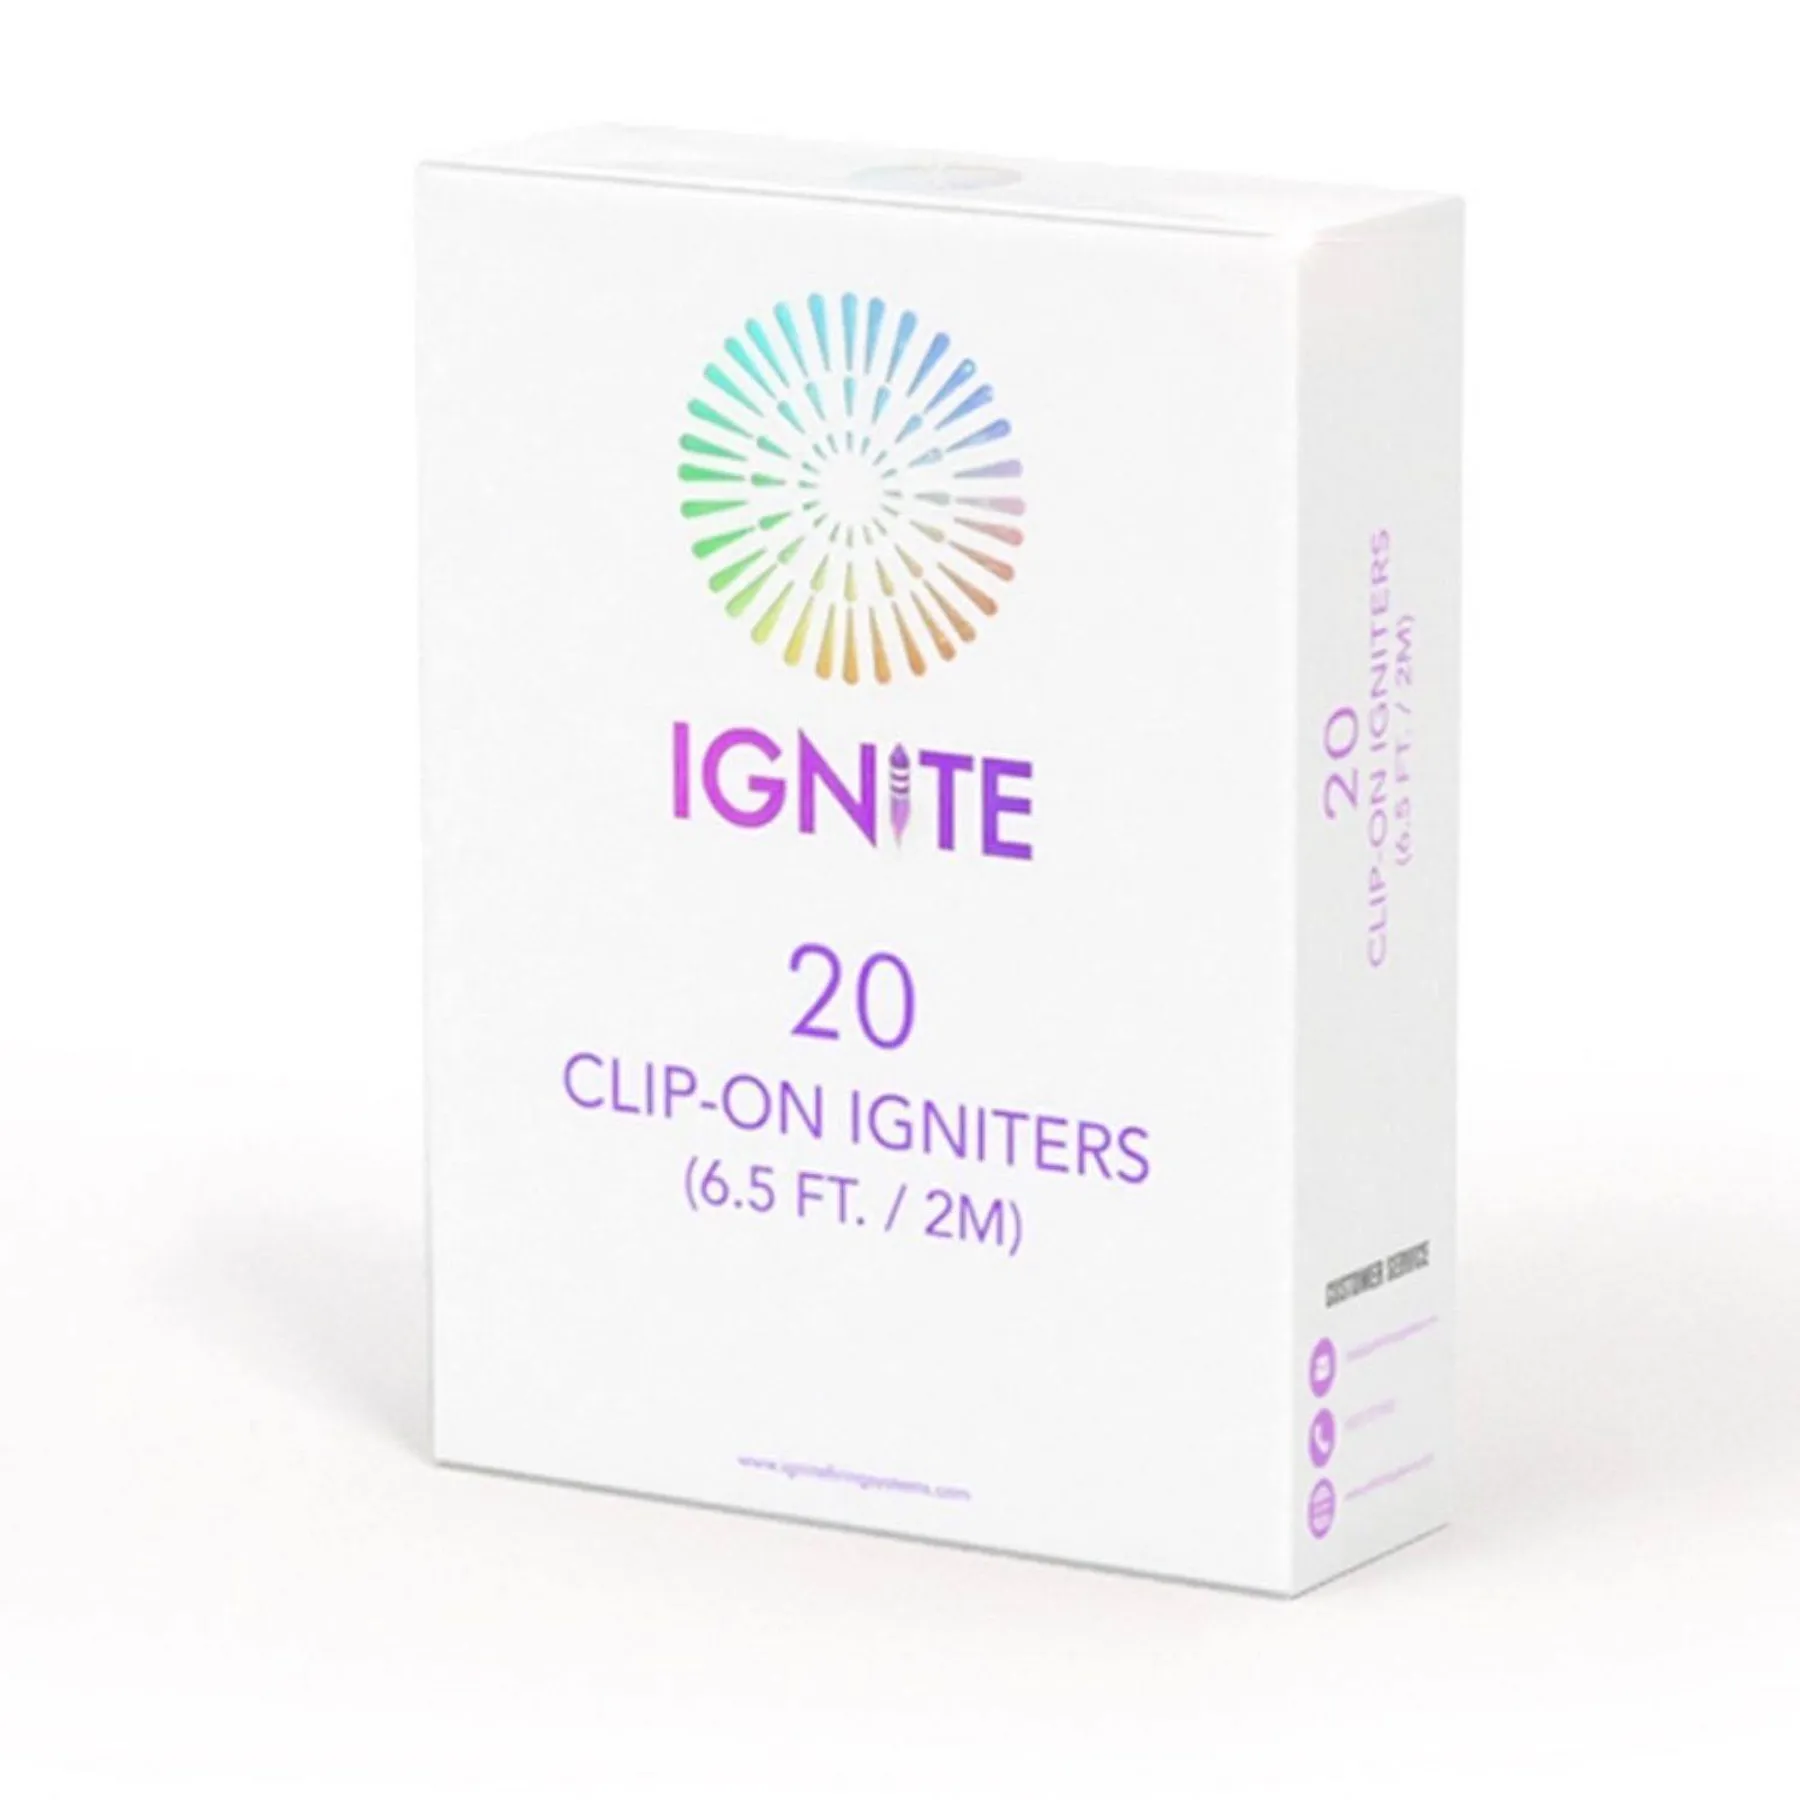 Igniters Product Box